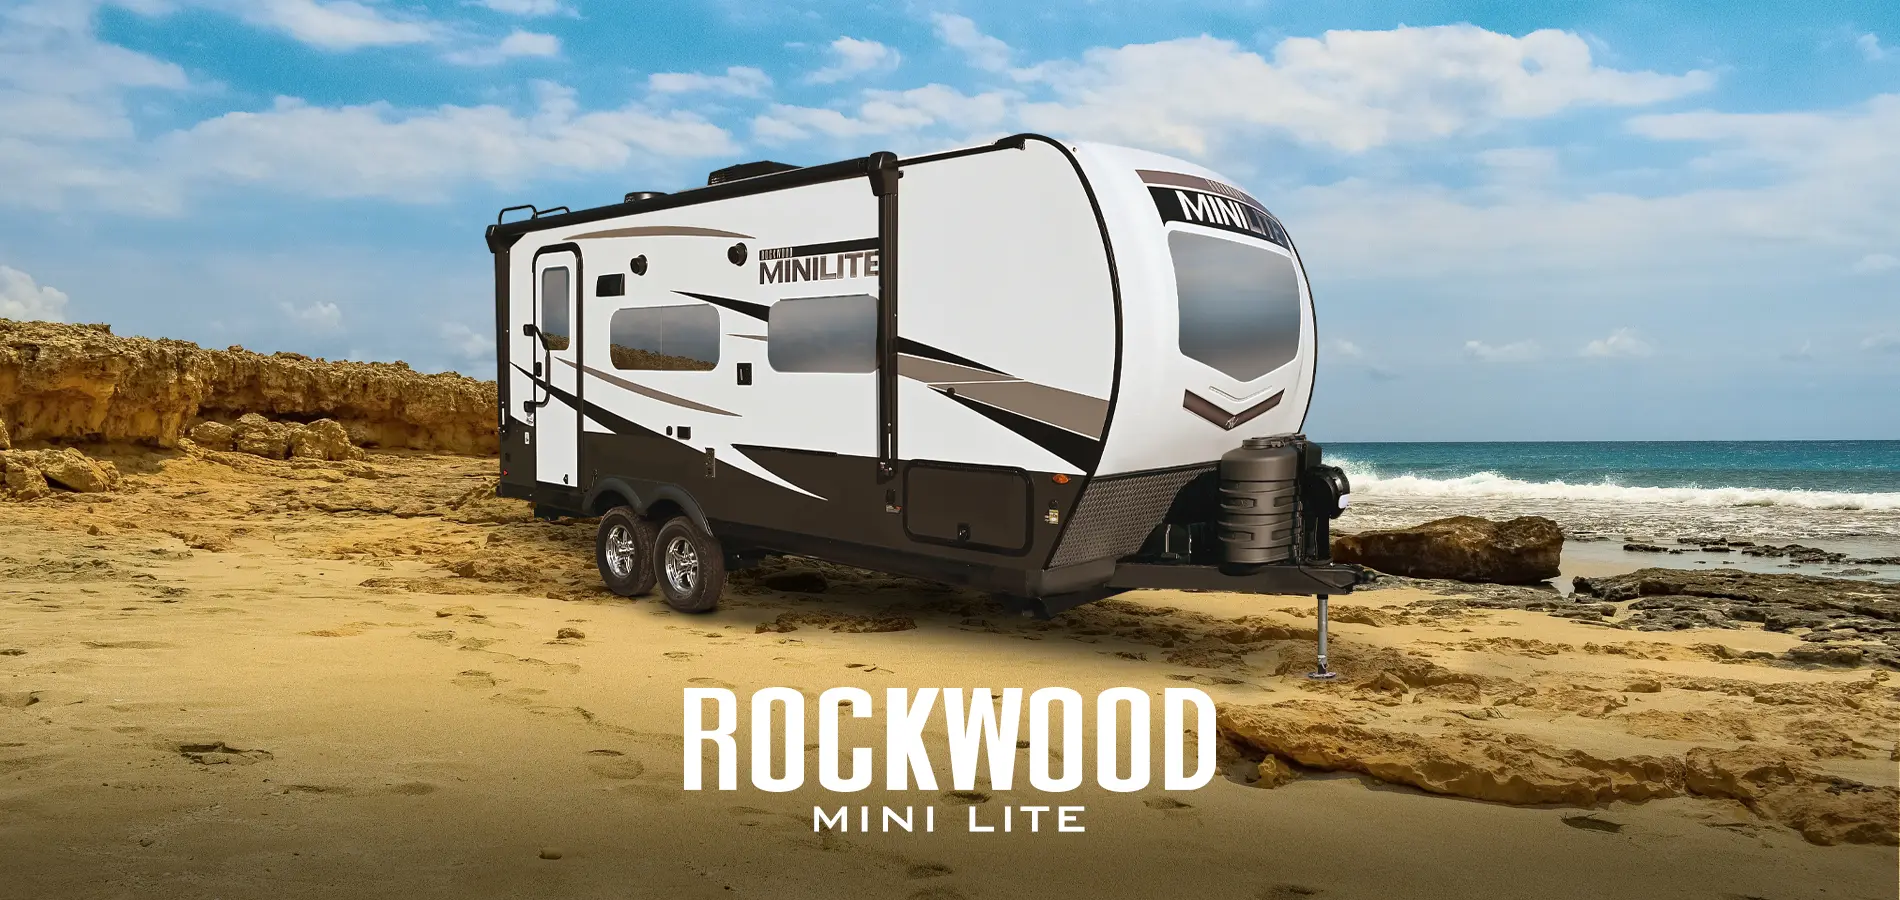 Rockwood Mini Lite RVs